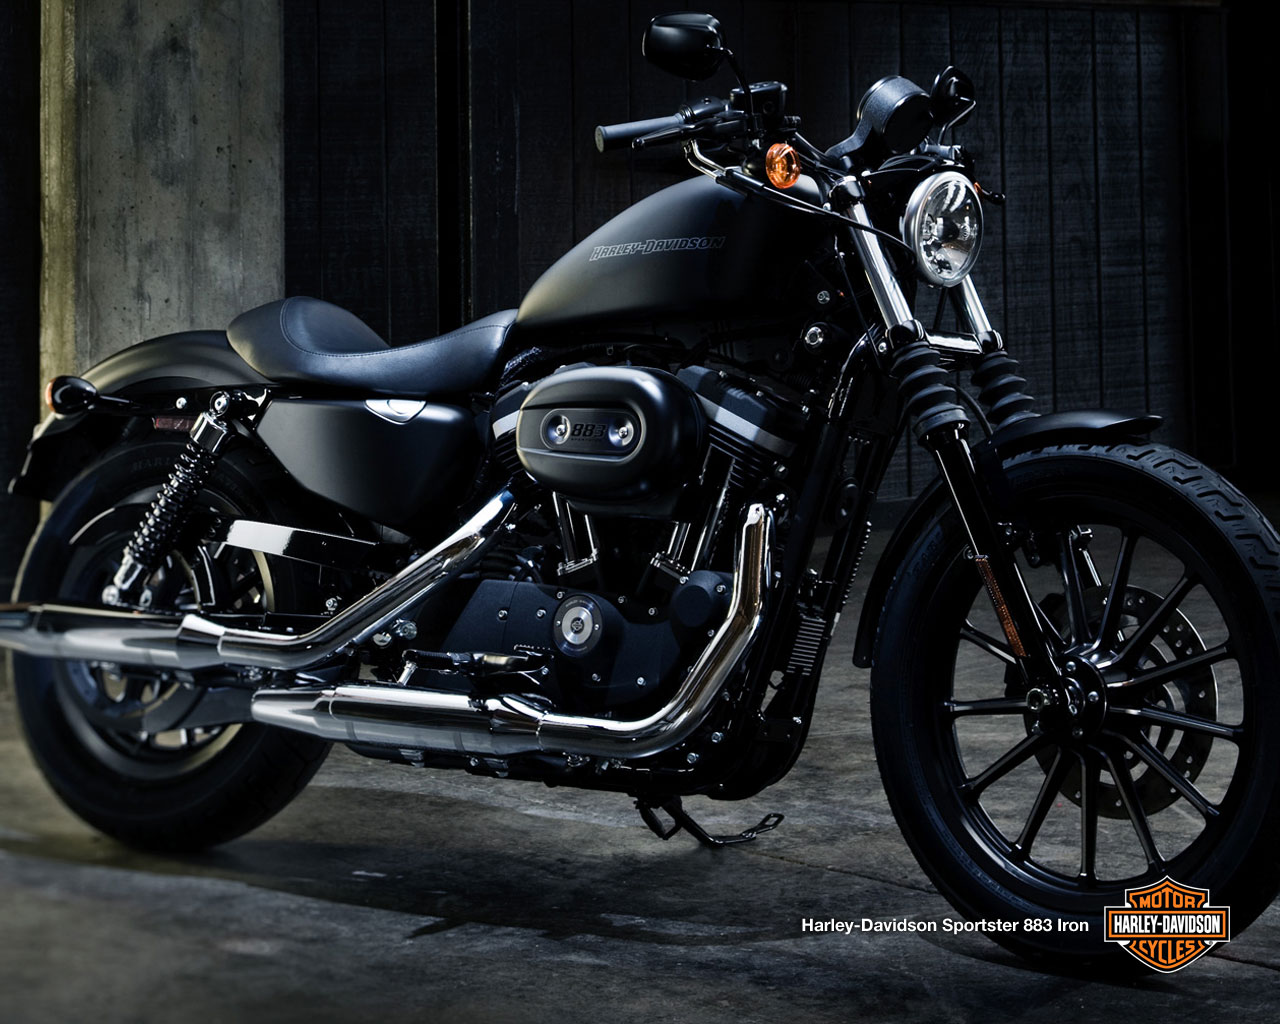 Harley Davidson Sportster Iron Wallpaper